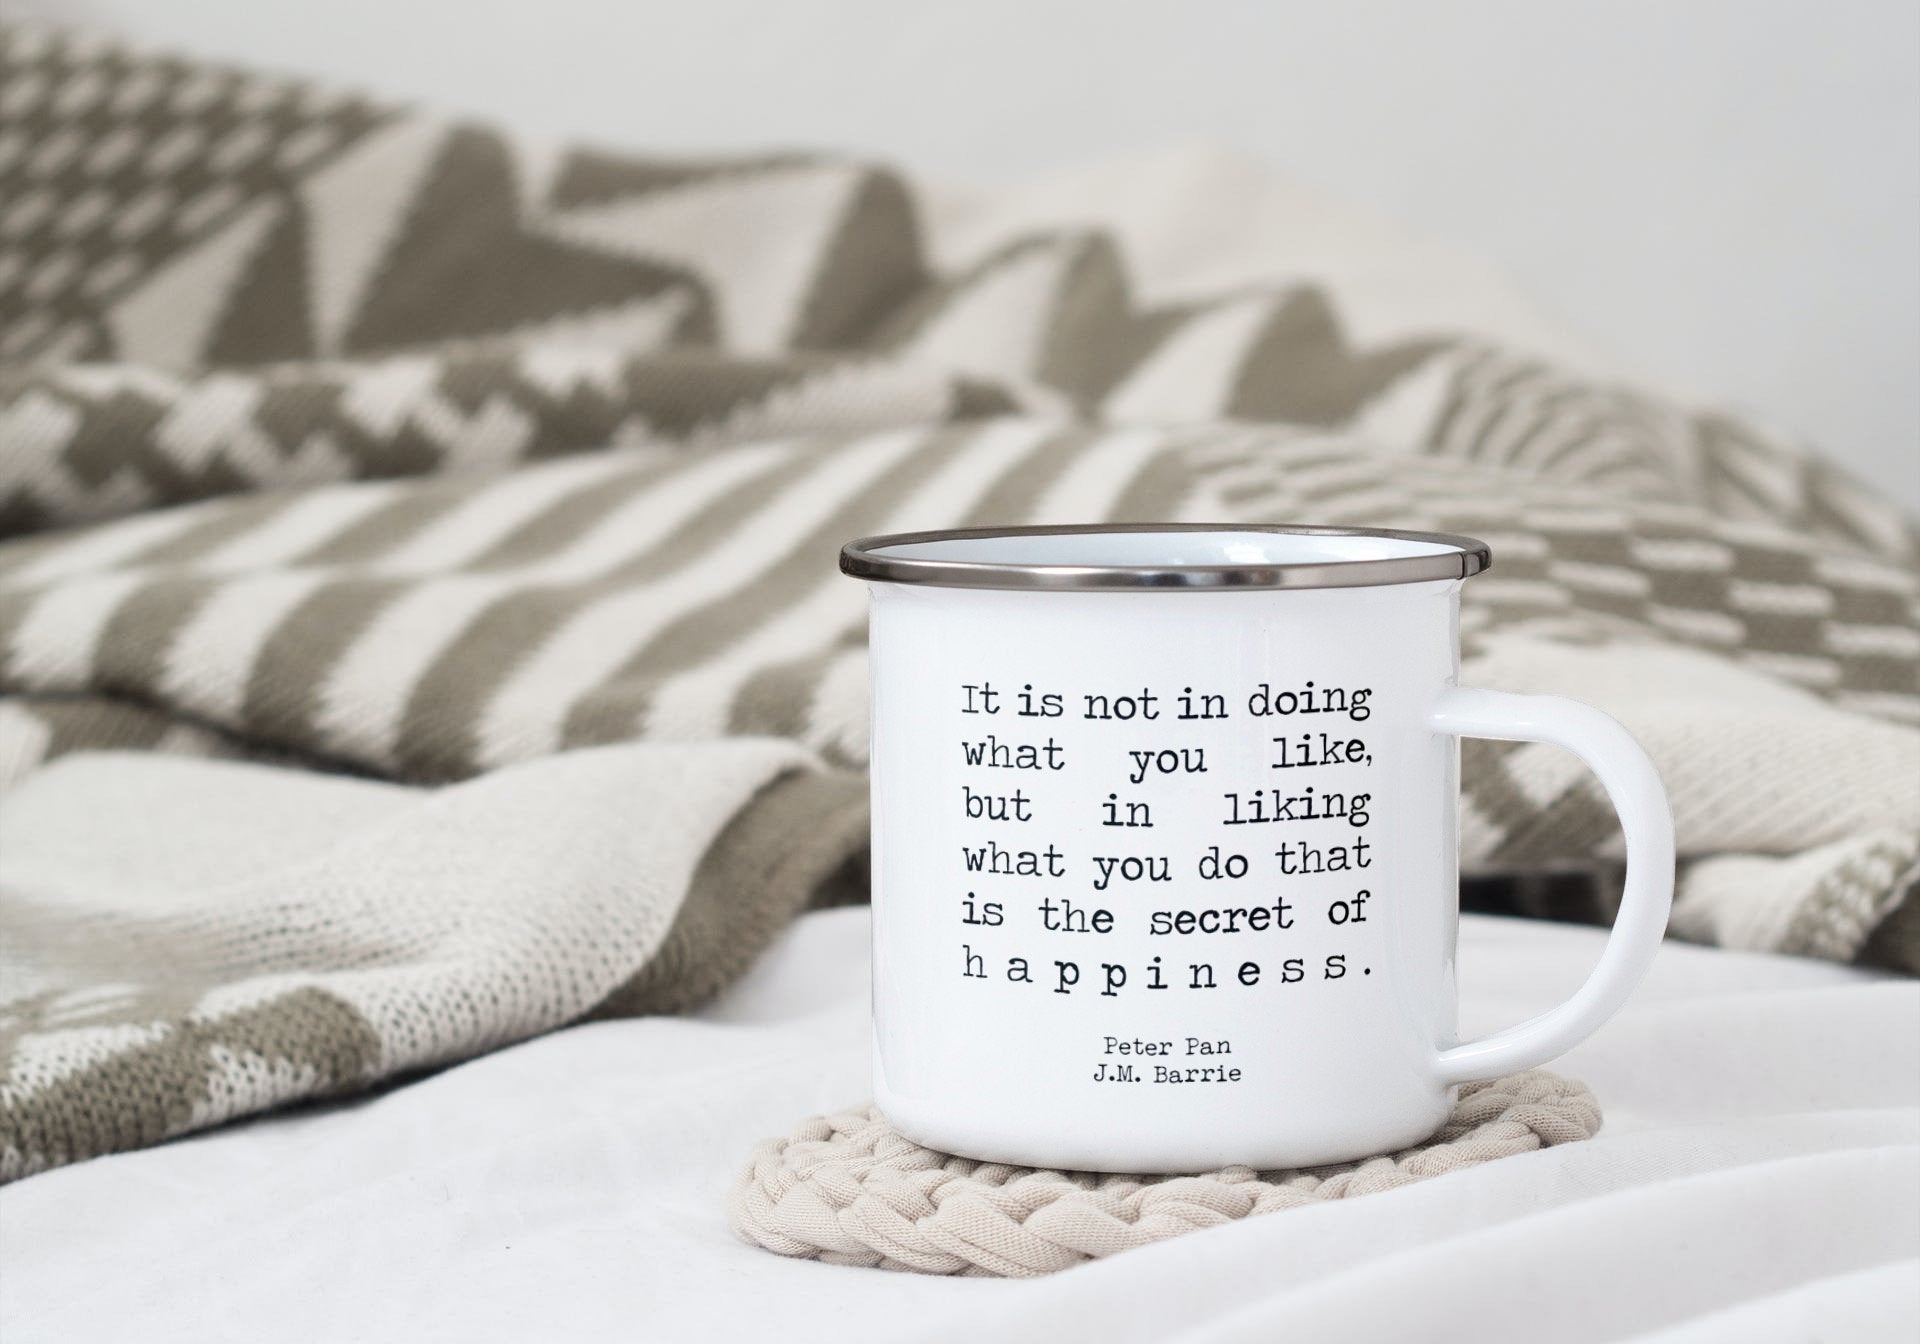 Peter Pan Happiness Quote Enamel Coffee Mug, Tea Mug Literary Gifts